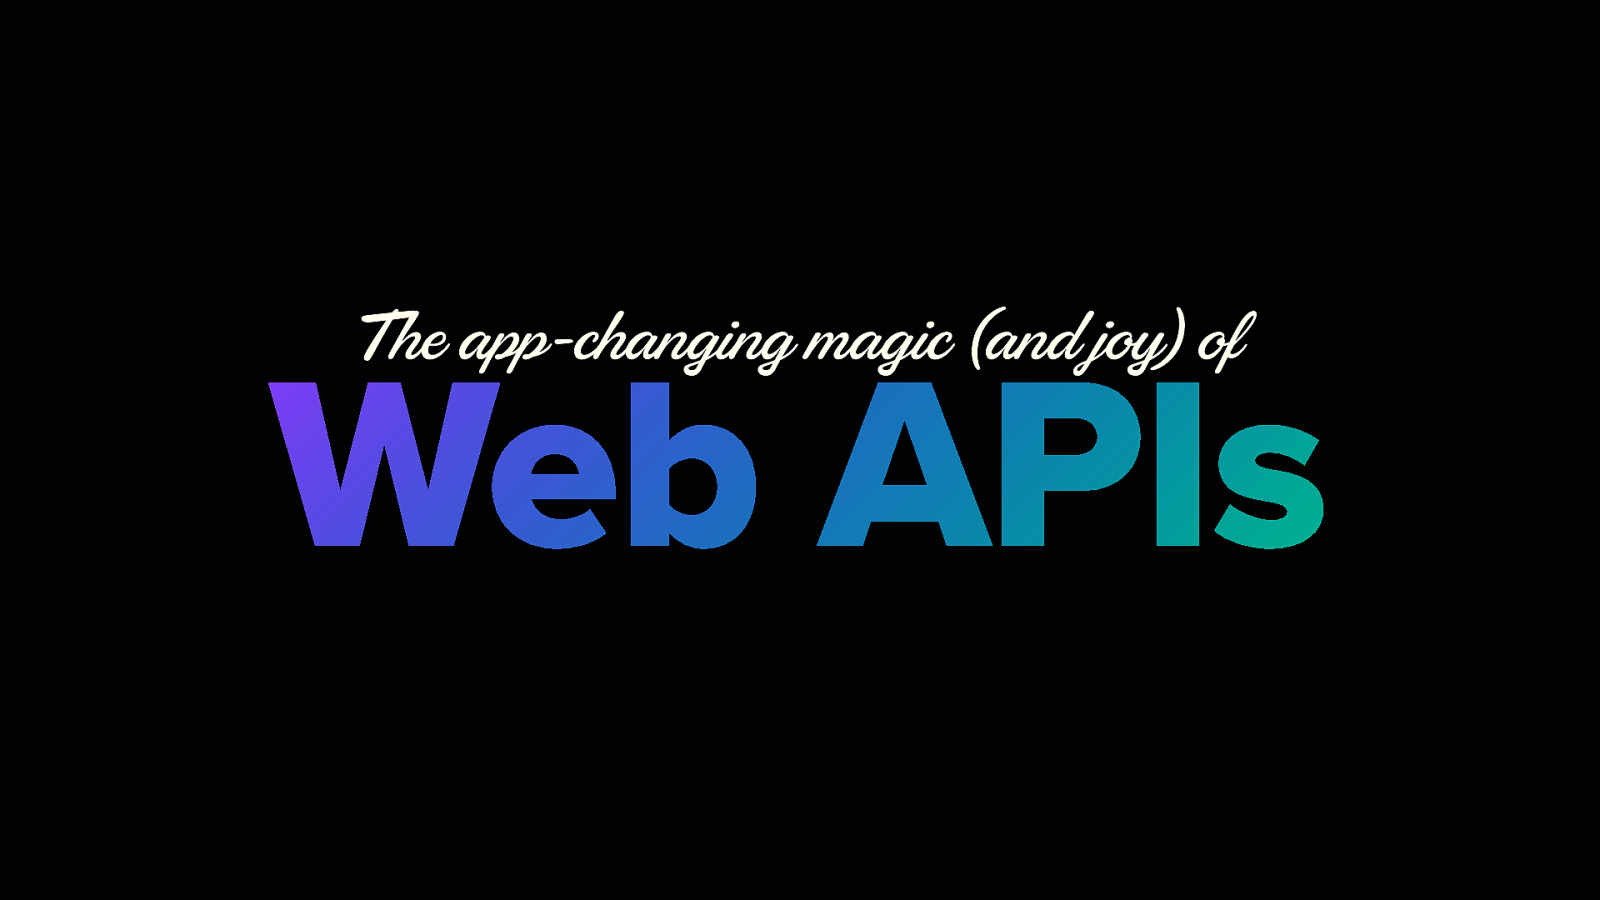 The app-changing magic (and joy) of Web APIs